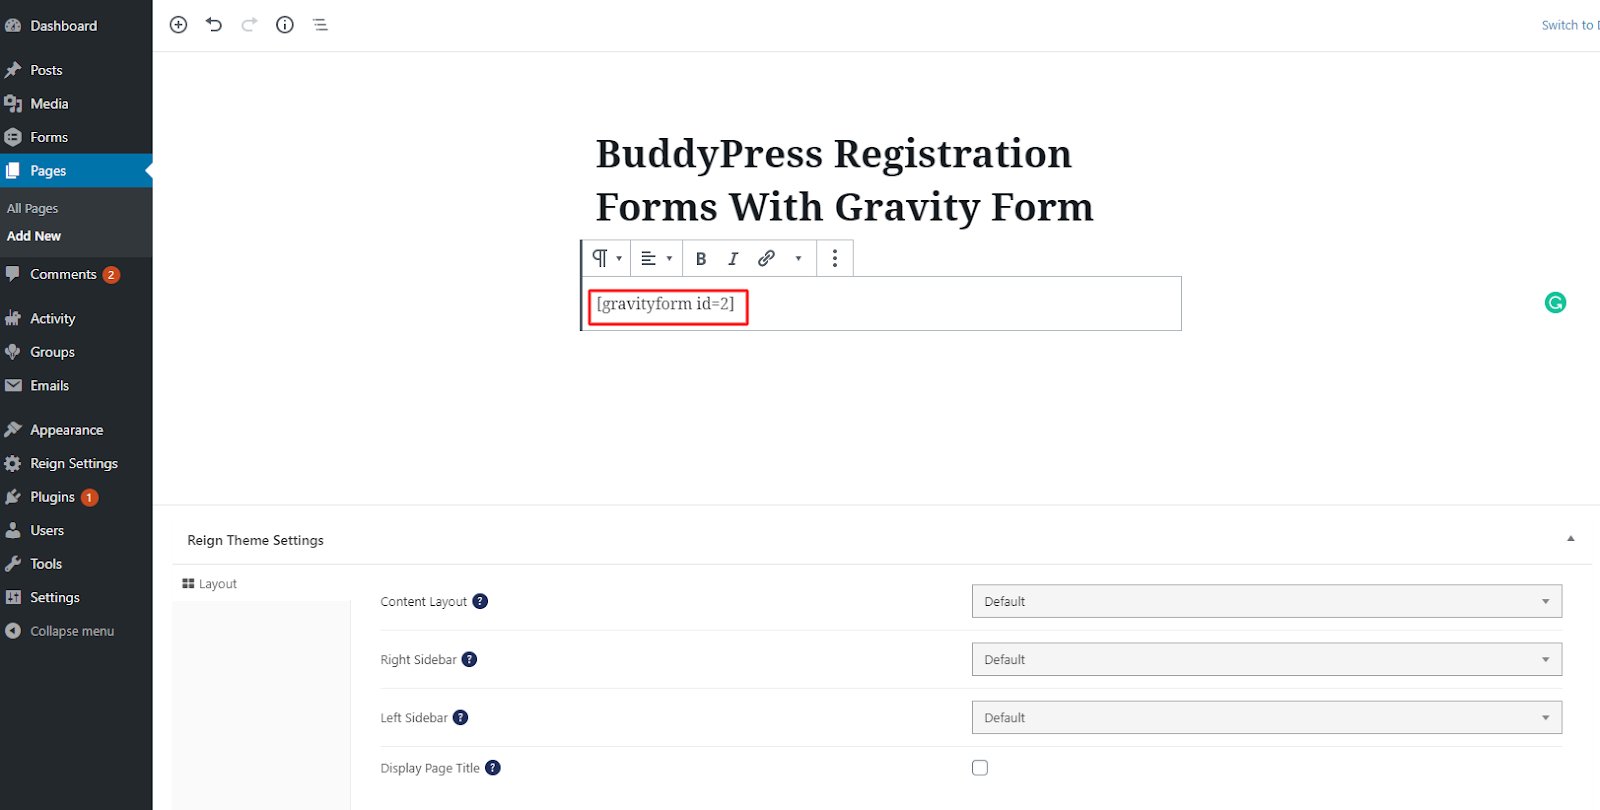 Buddypress Registration Forms shortcode